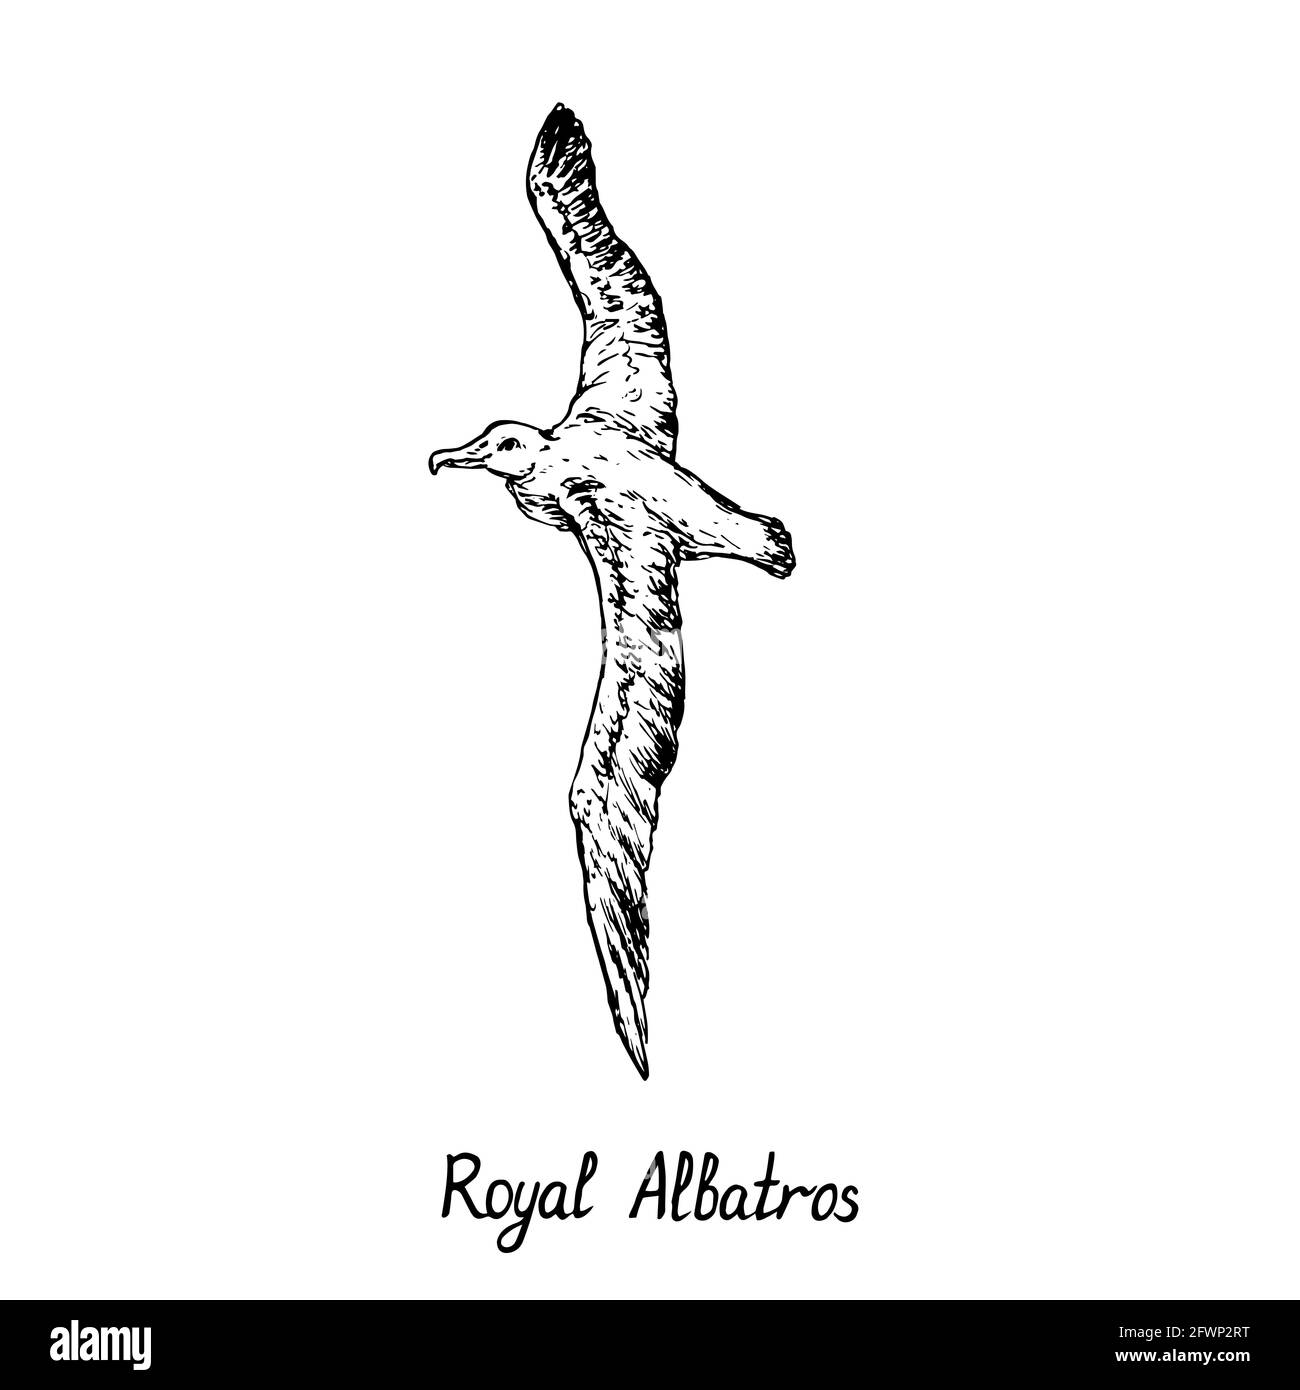 Albatross Tattoo Images  Designs